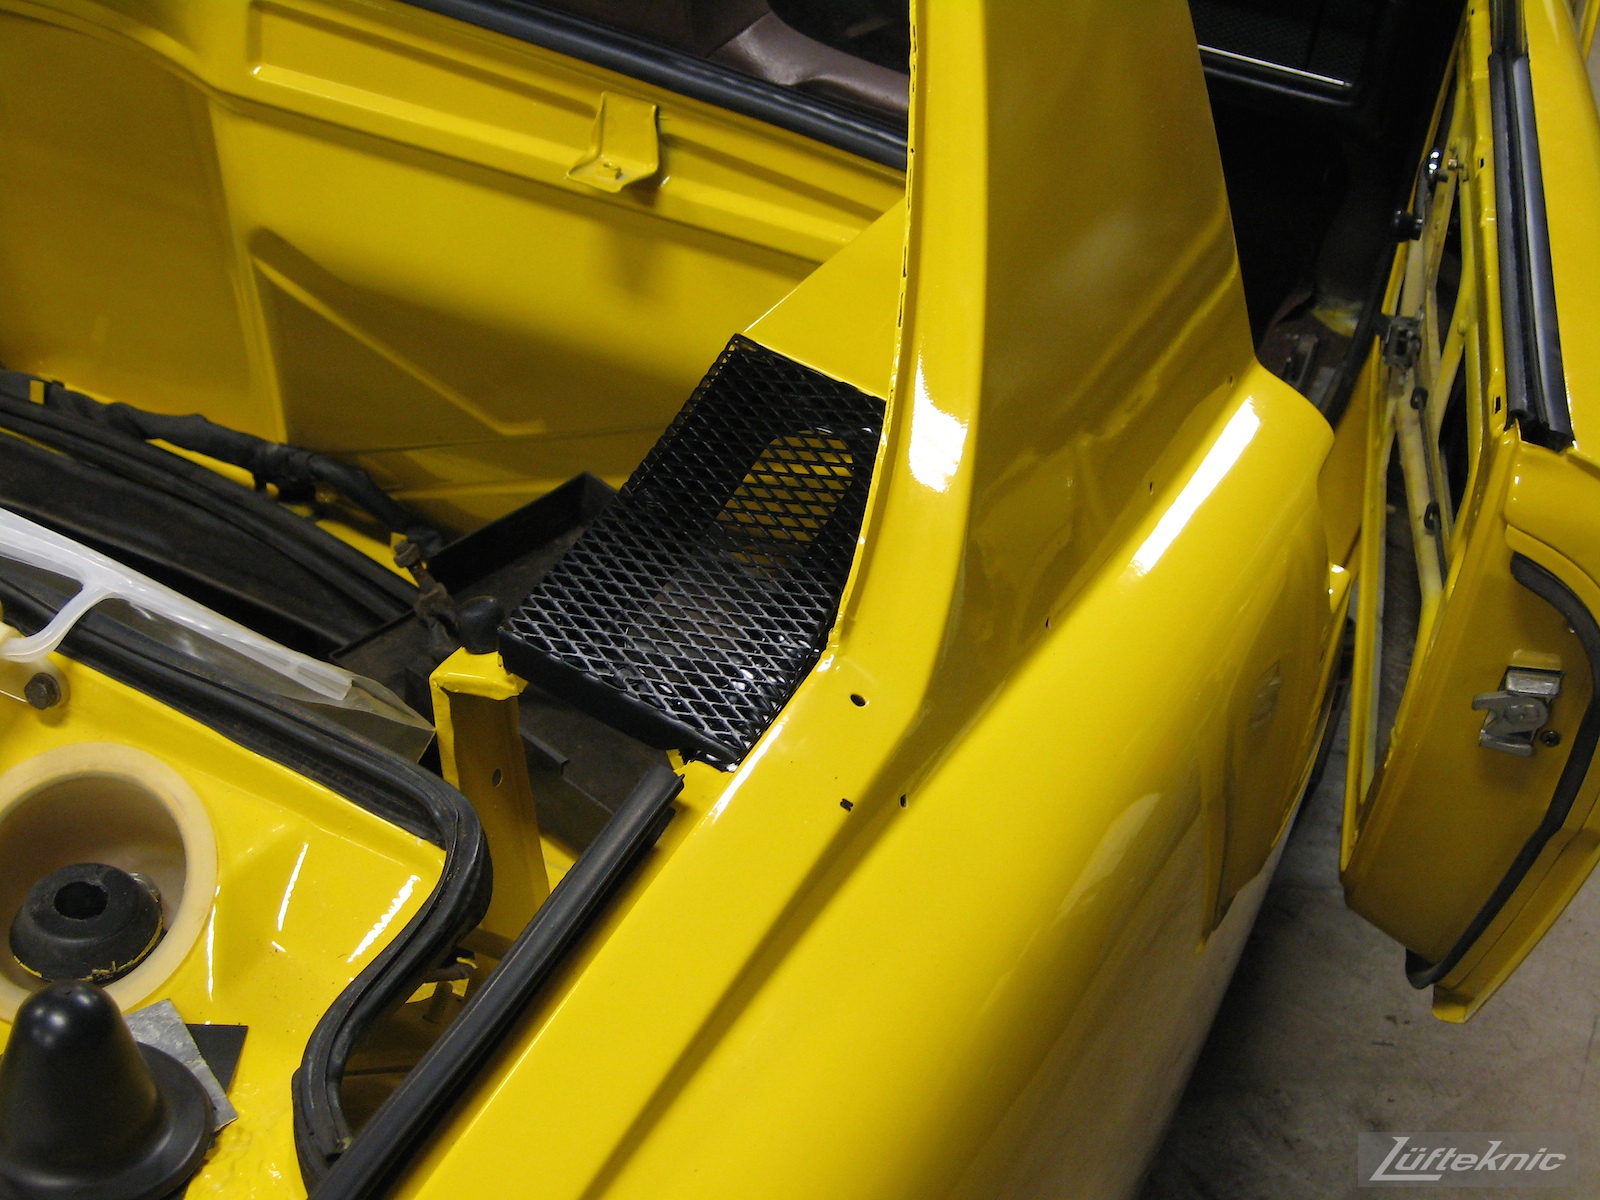 Rear engine decklid cover details on a restored yellow Porsche 914 at Lufteknic.